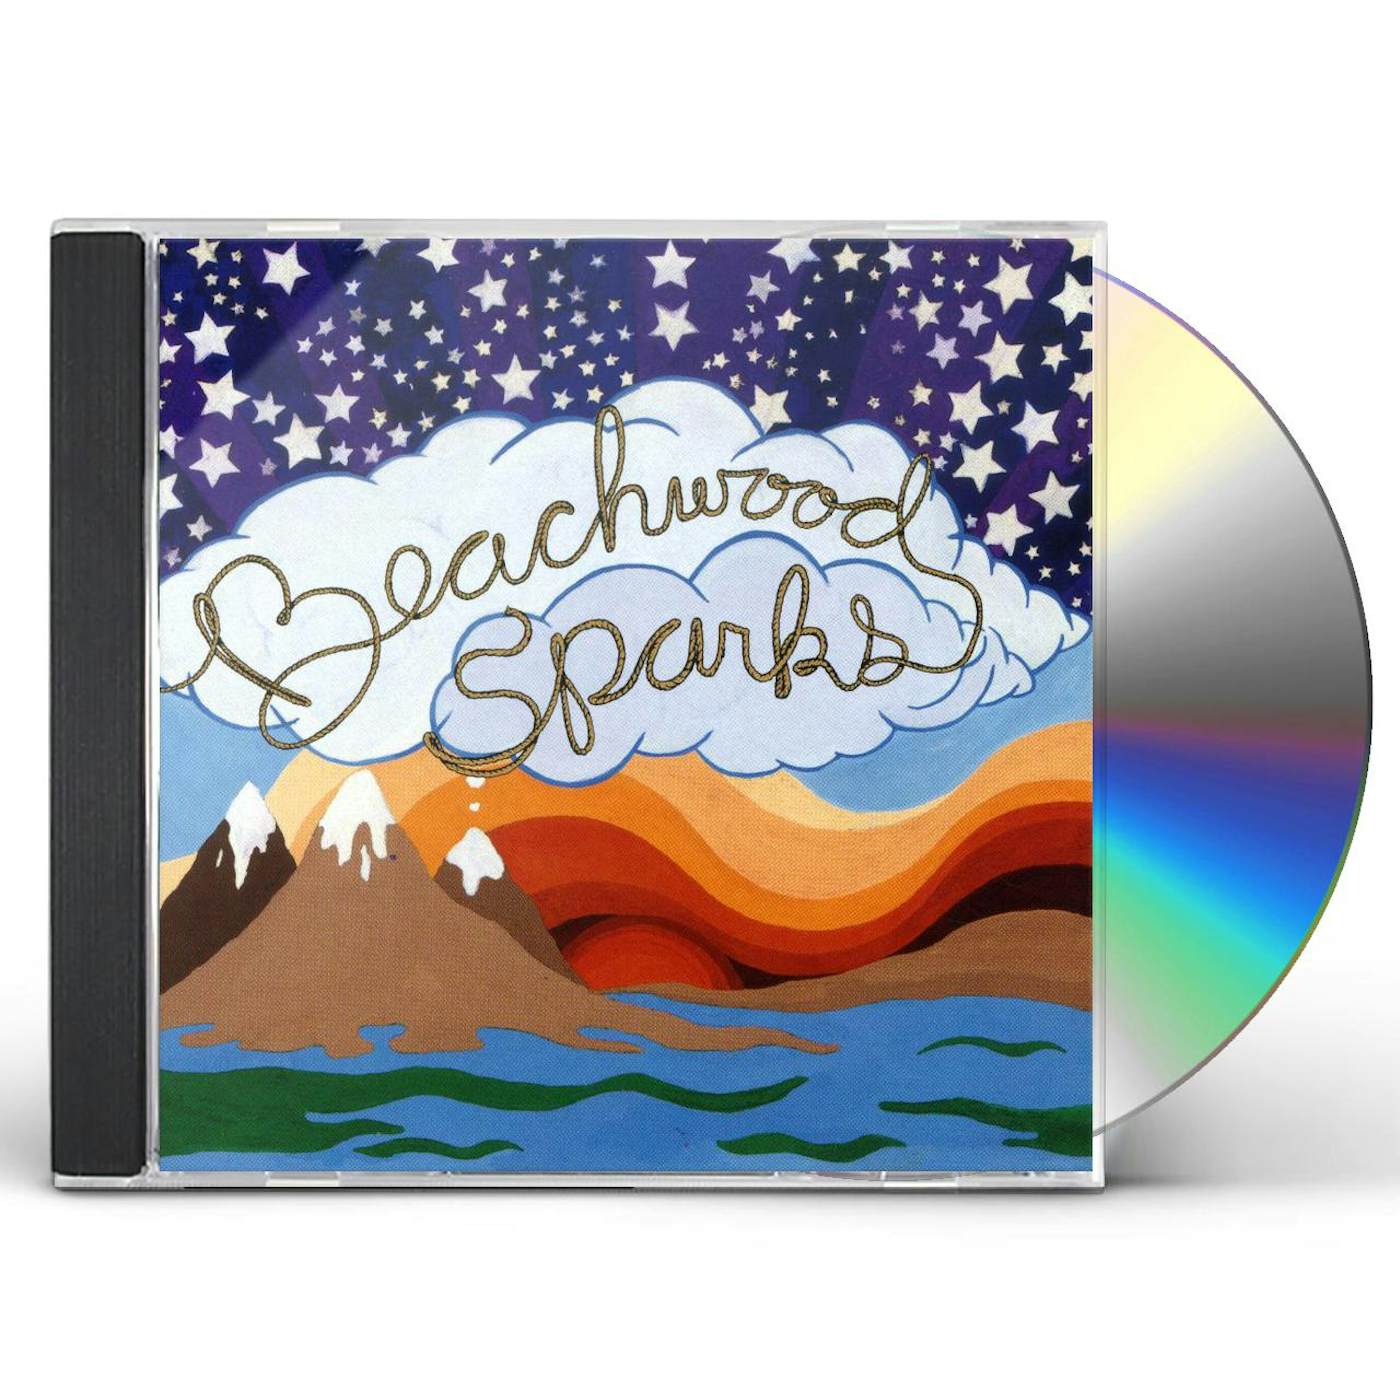 BEACHWOOD SPARKS CD